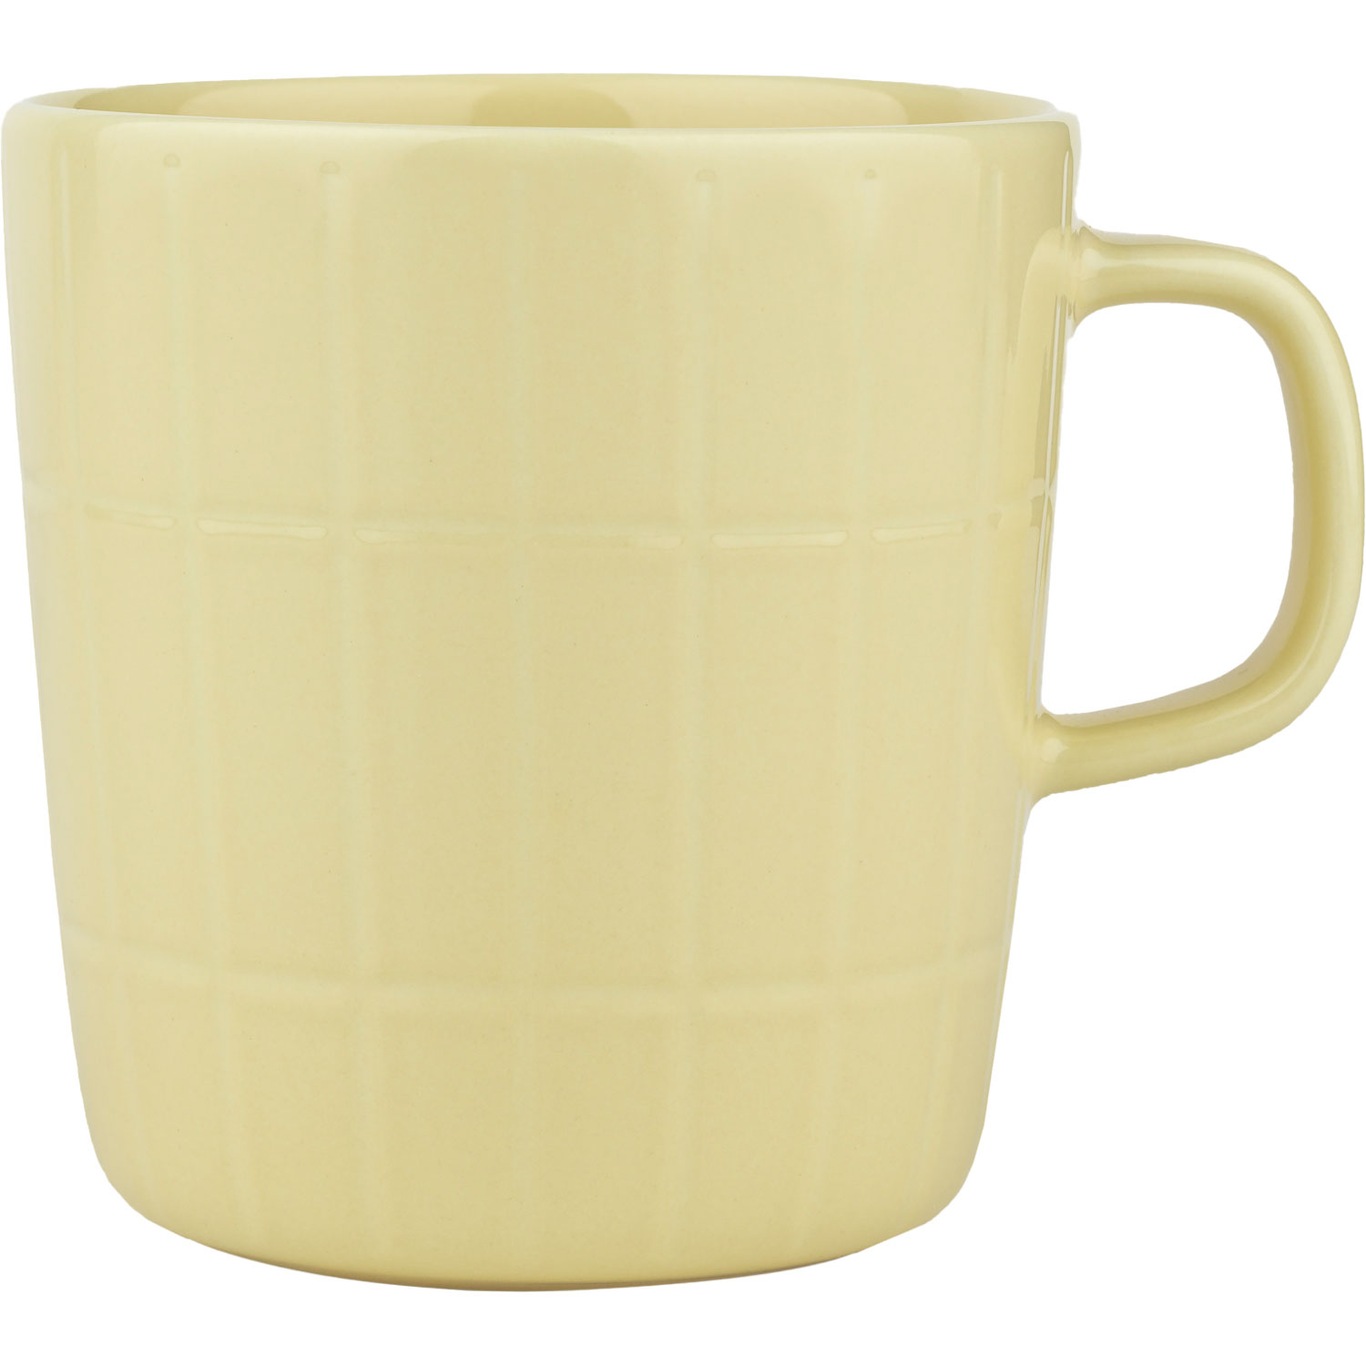 Oiva/Tiiliskivi Mug 40 cl, Butter Yellow